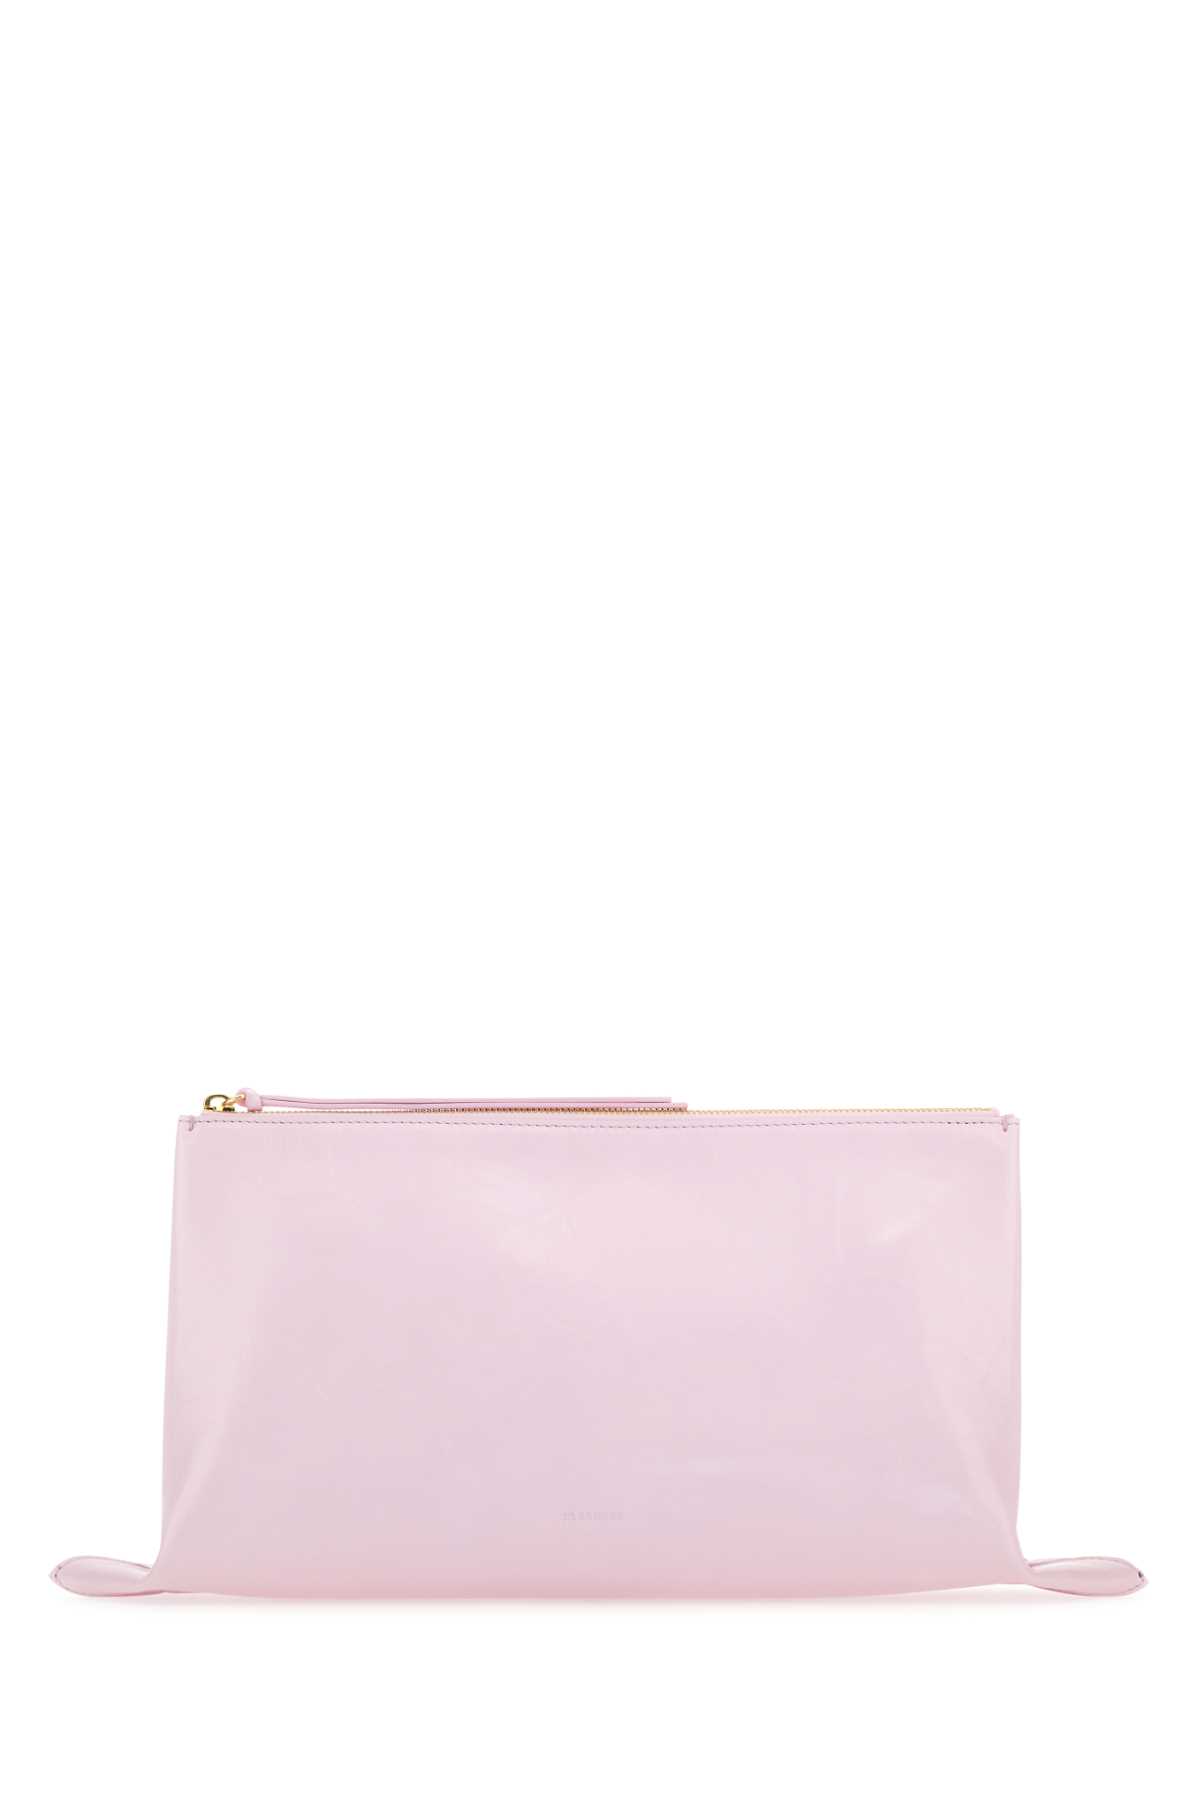 Pastel Pink Leather Medium Clutch